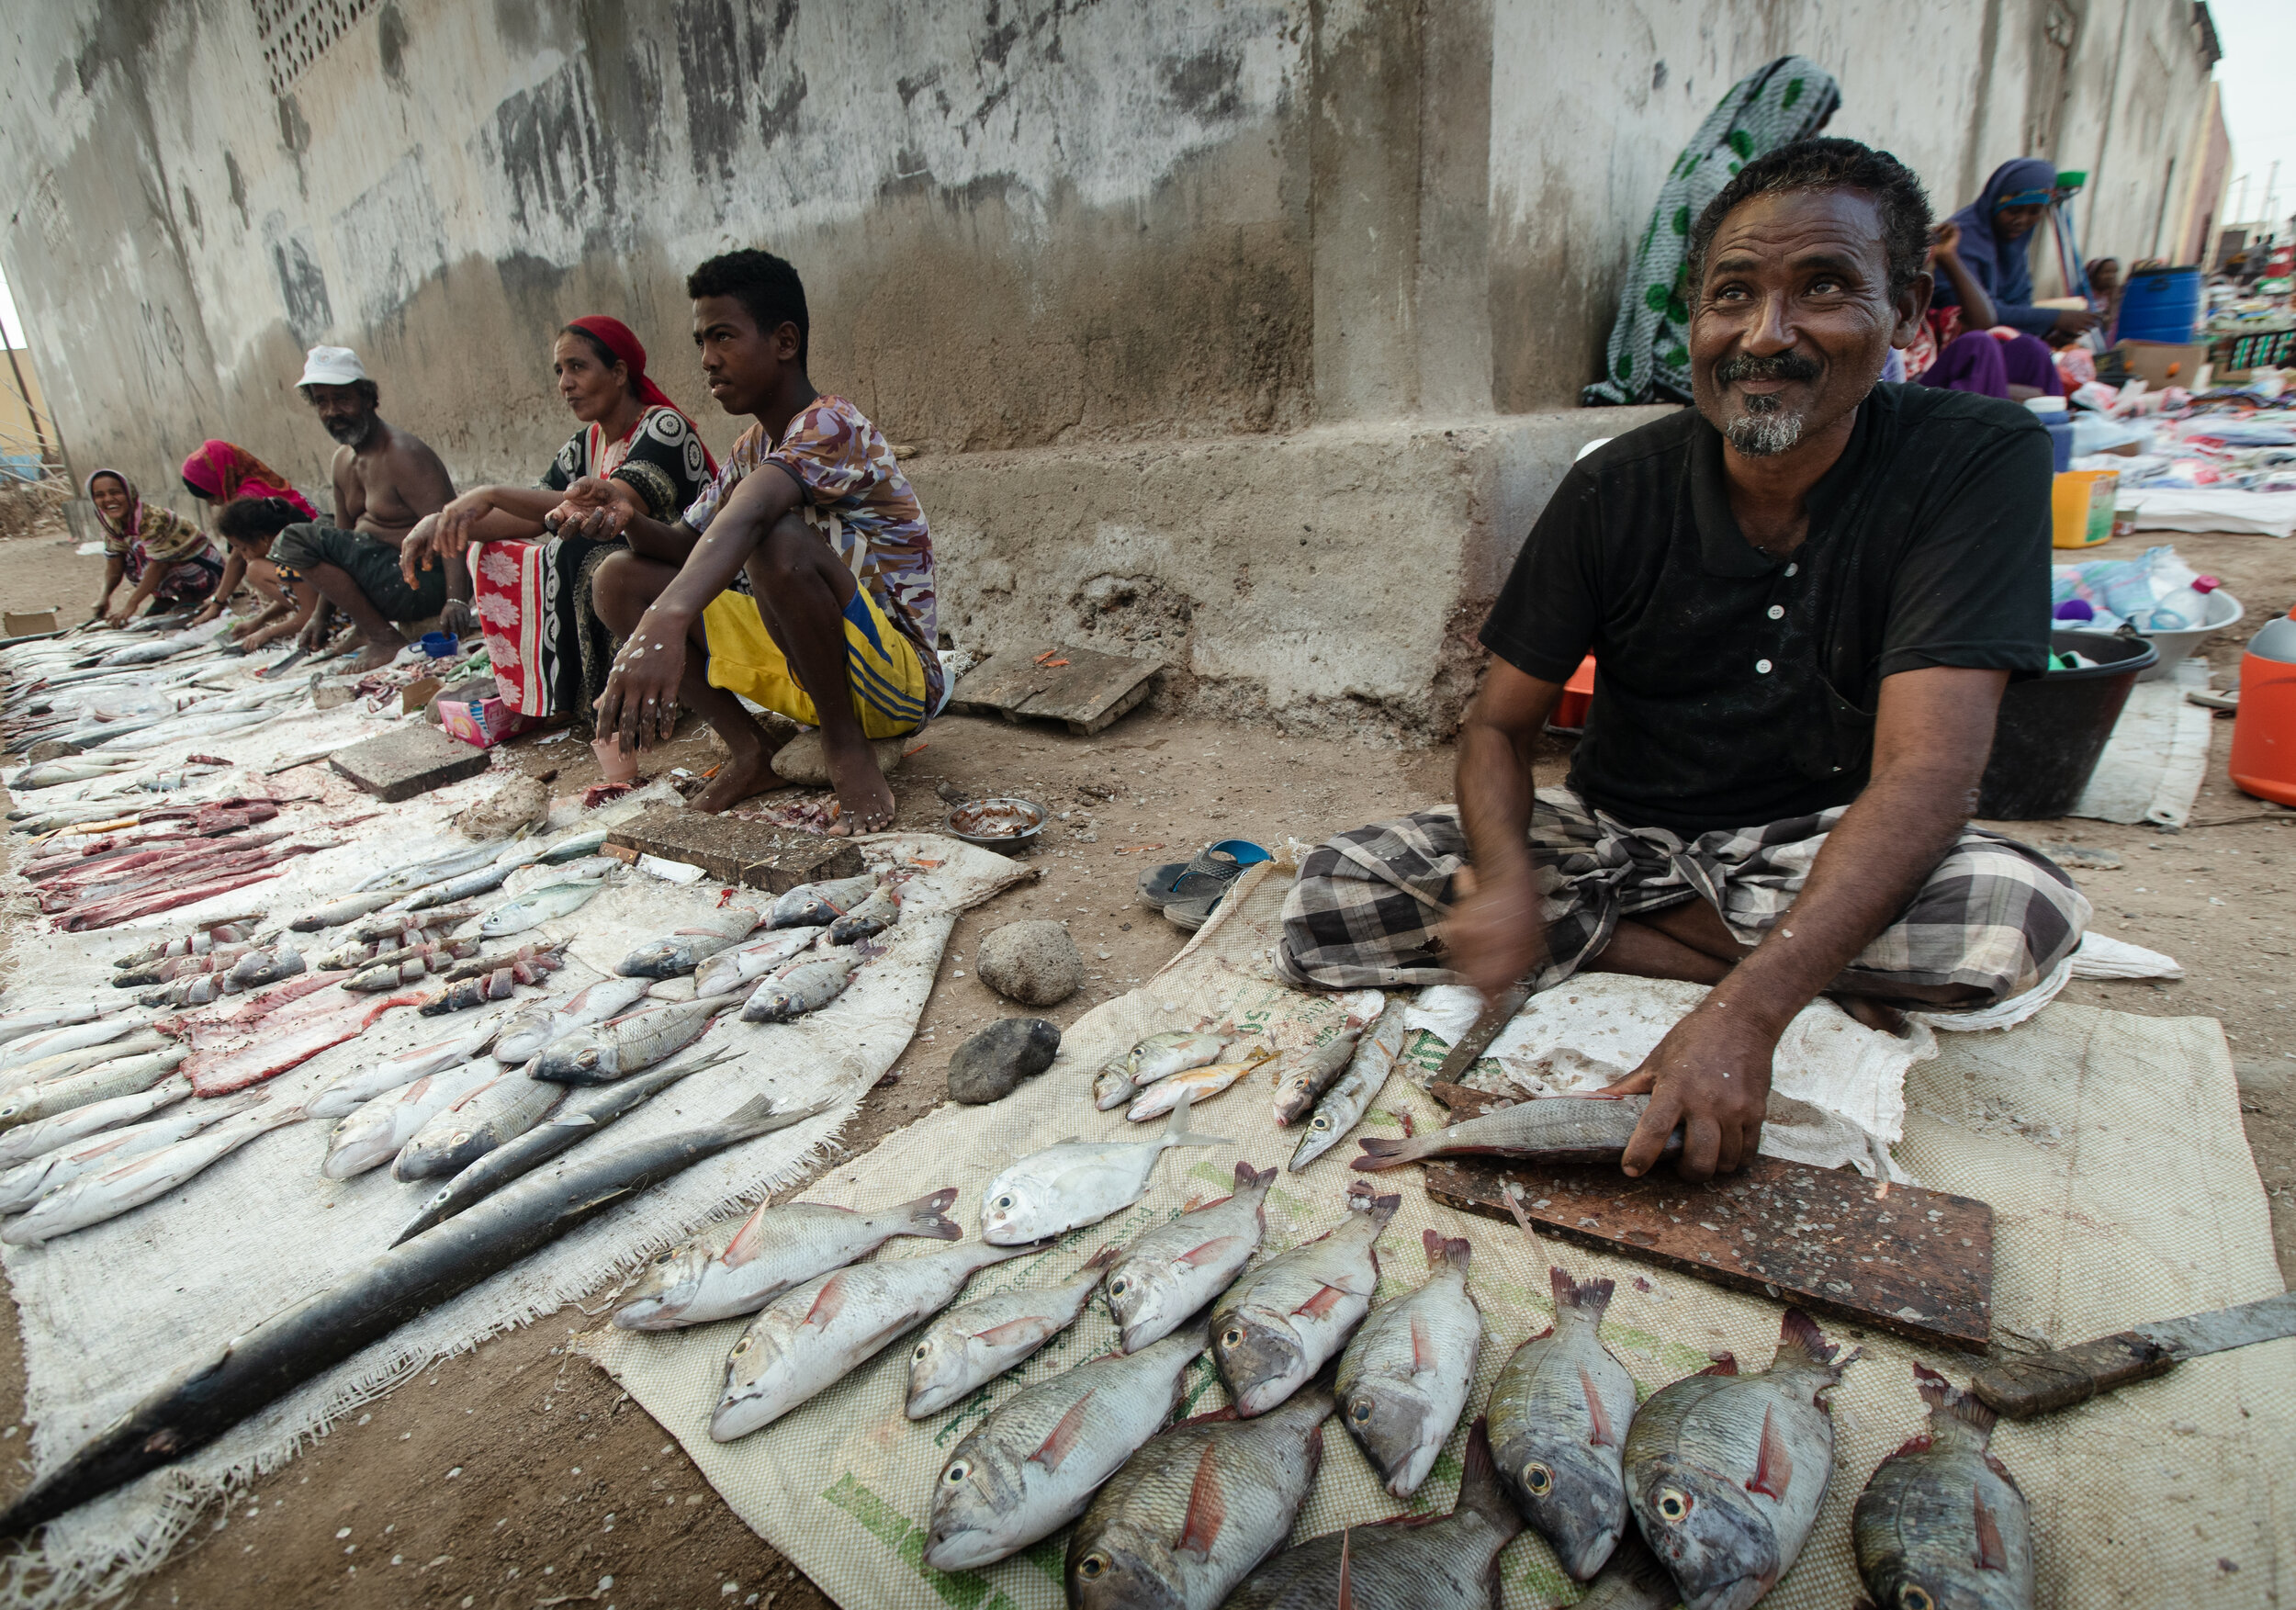  artisanal fish market in Obock, Djibouti, 2019 